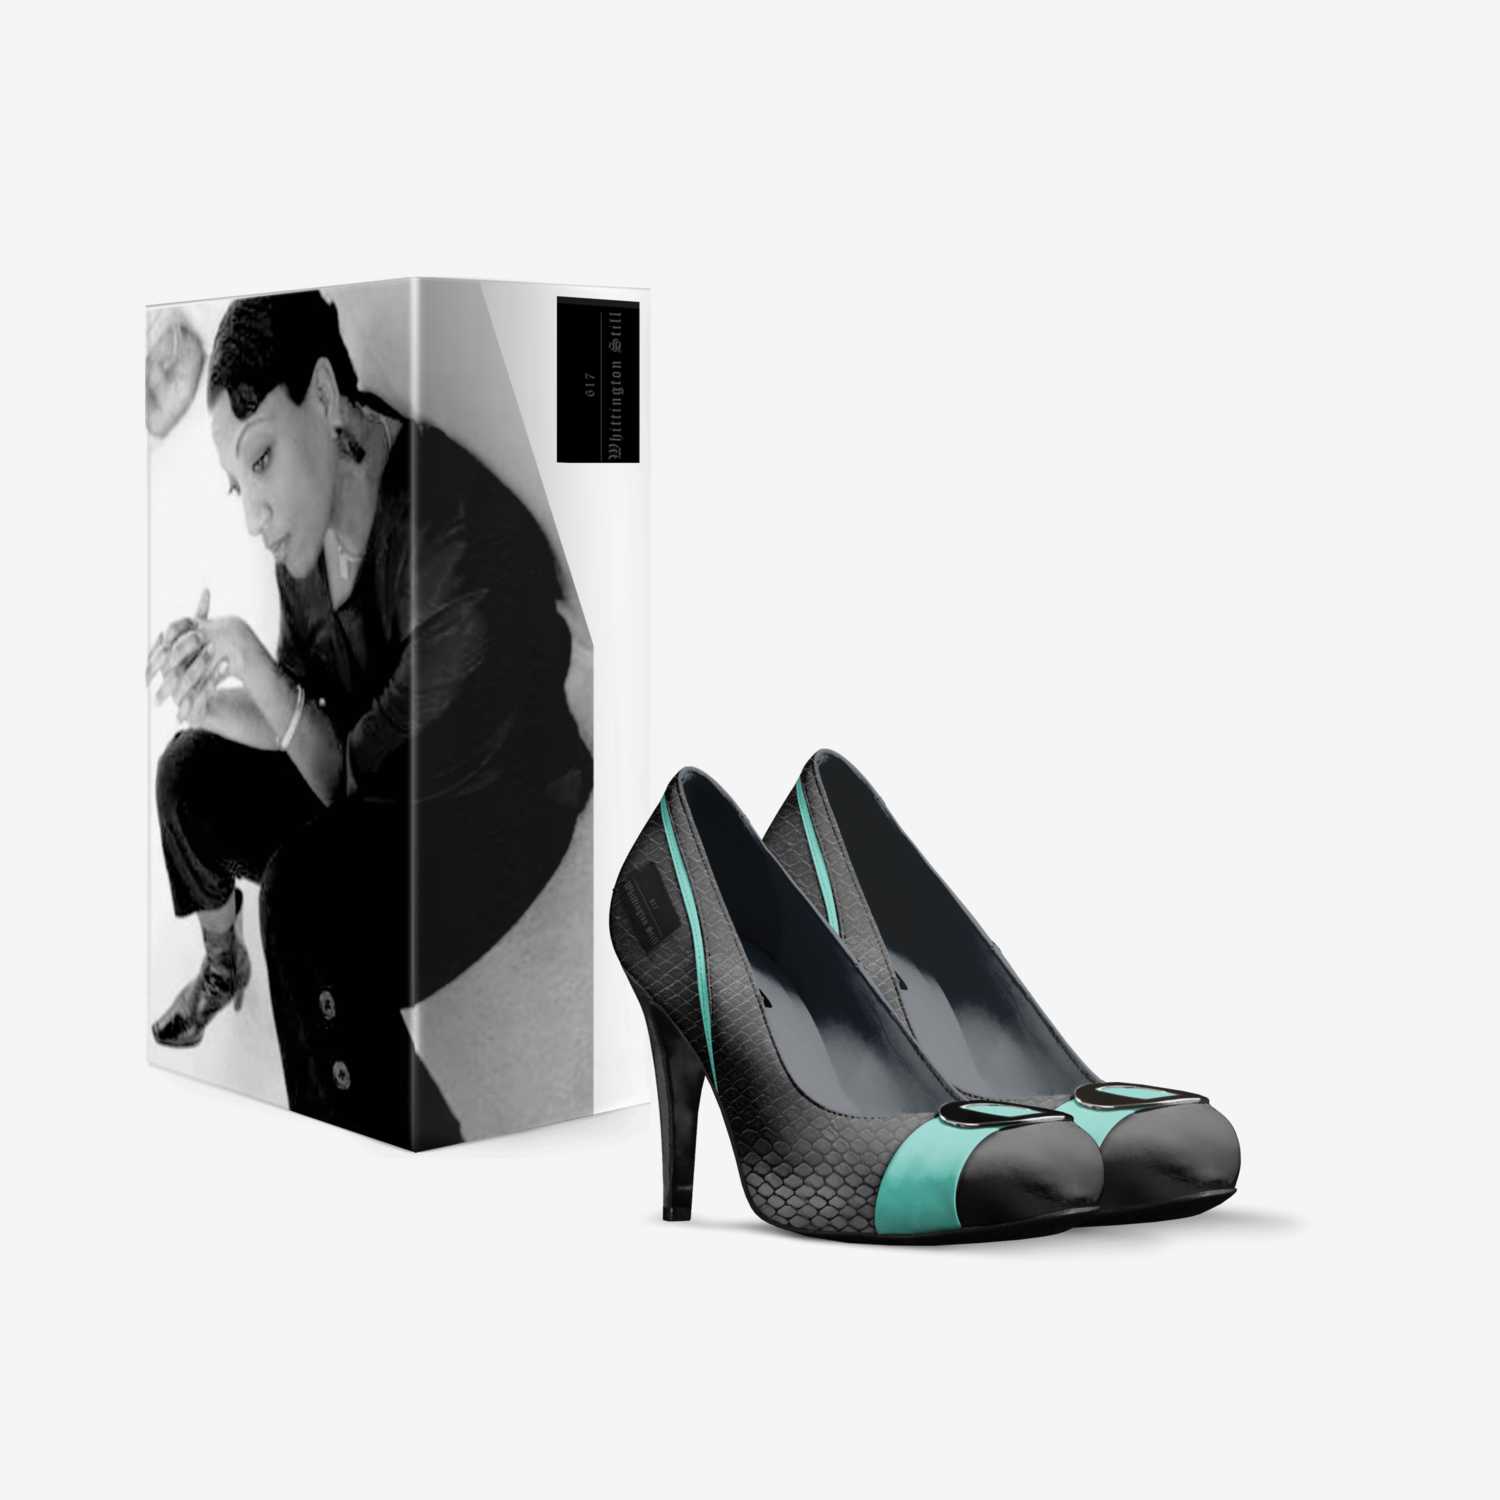 Sophia custom made in Italy shoes by Whittington Still | Box view